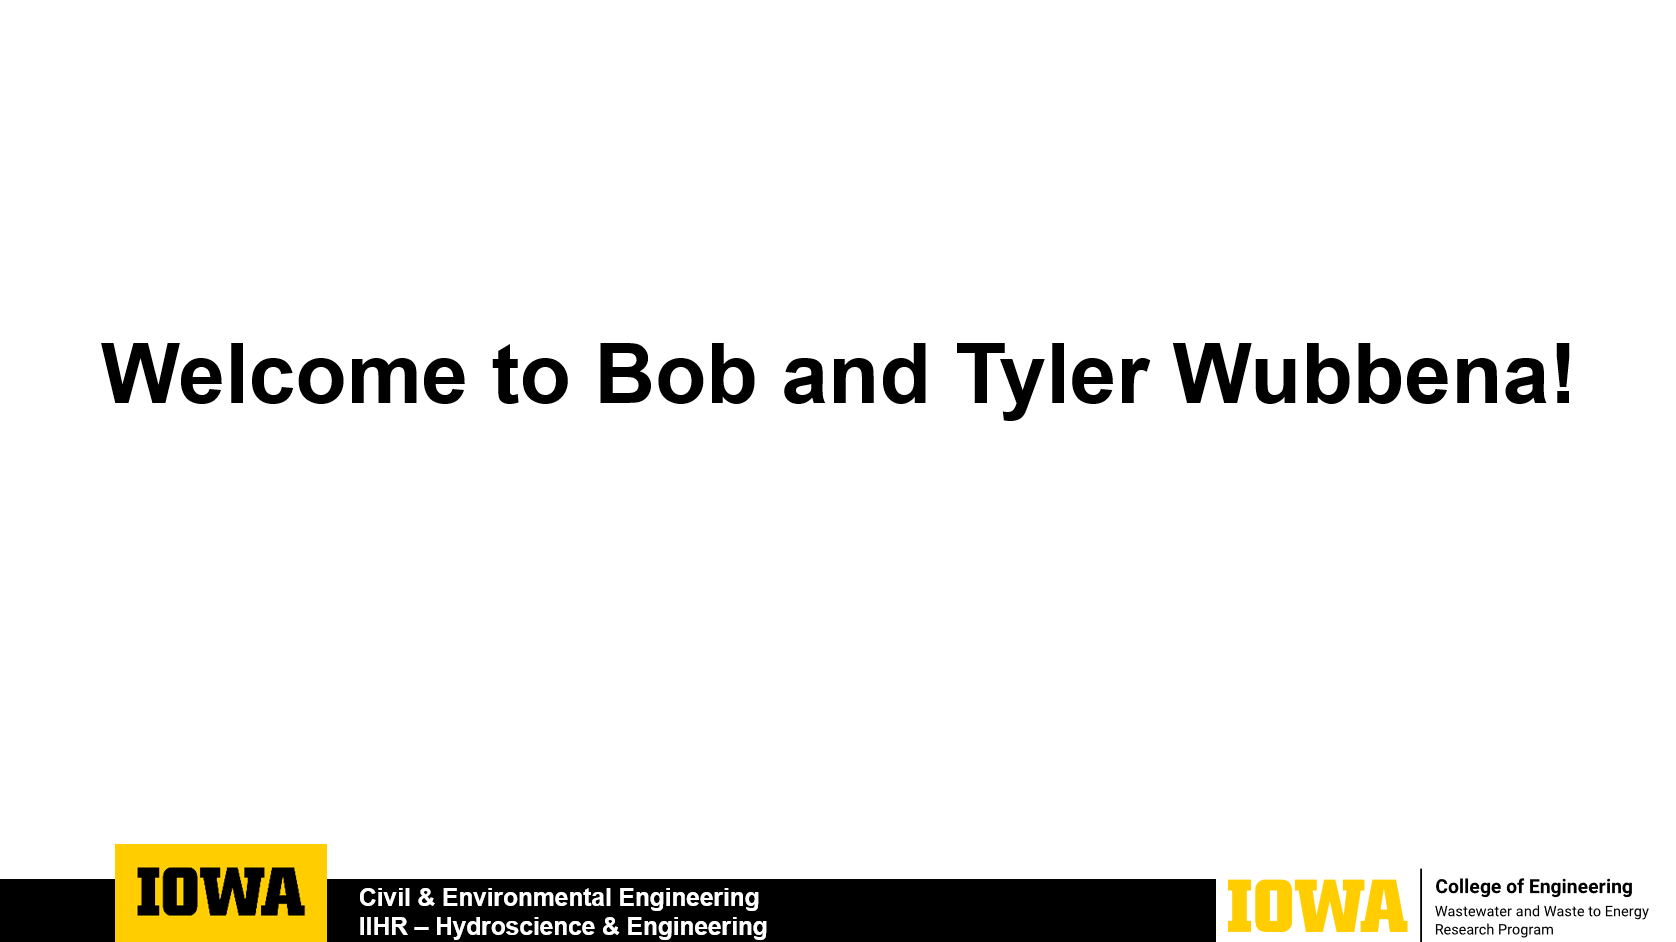 Bob and Tyler